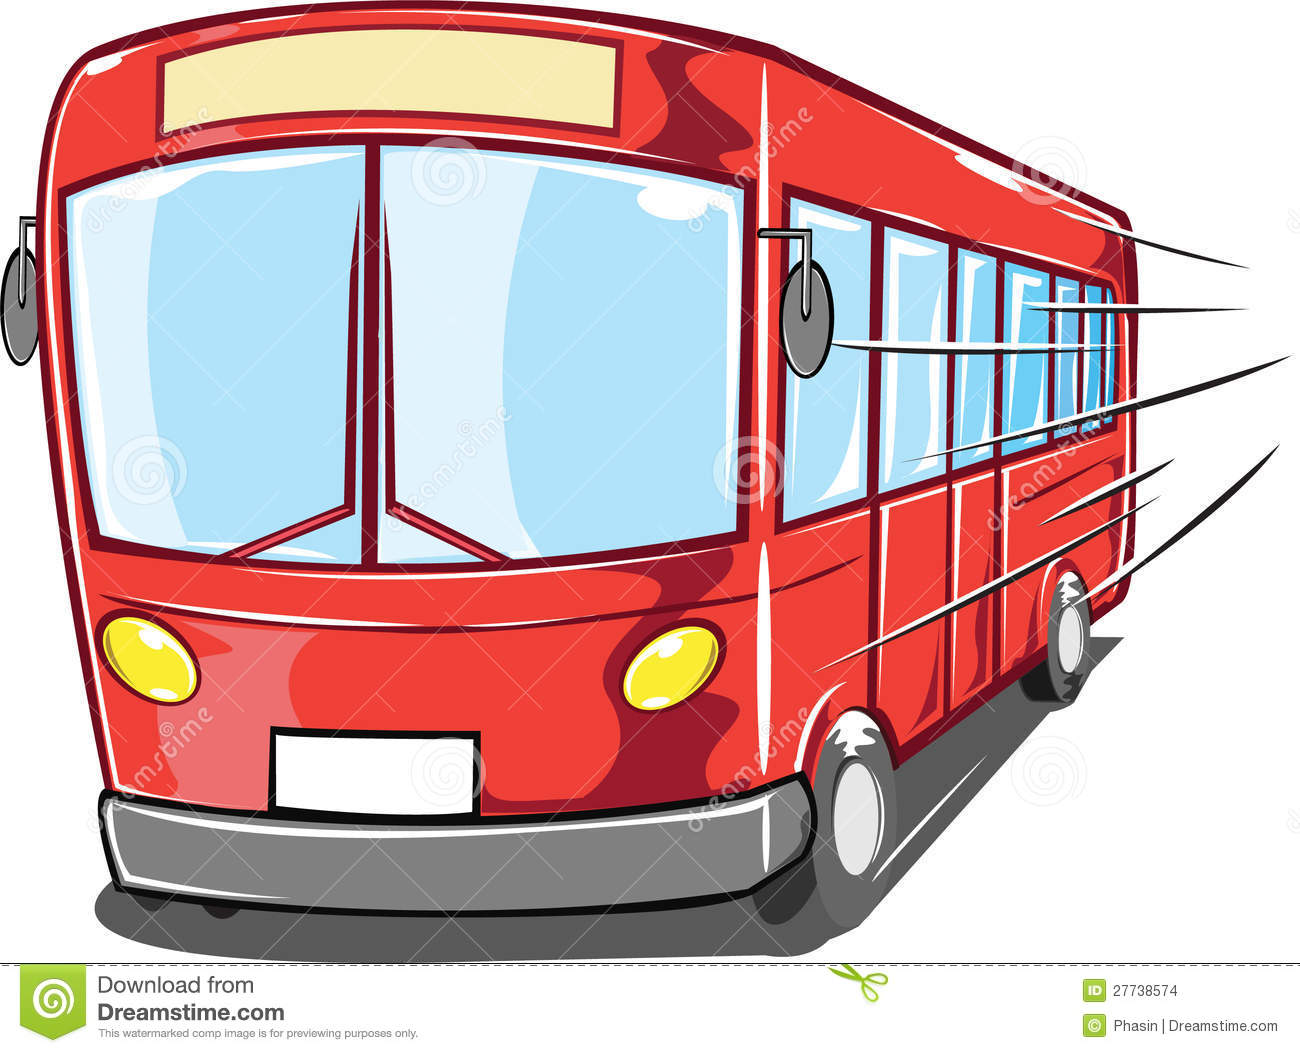 Red passenger or tour bus,